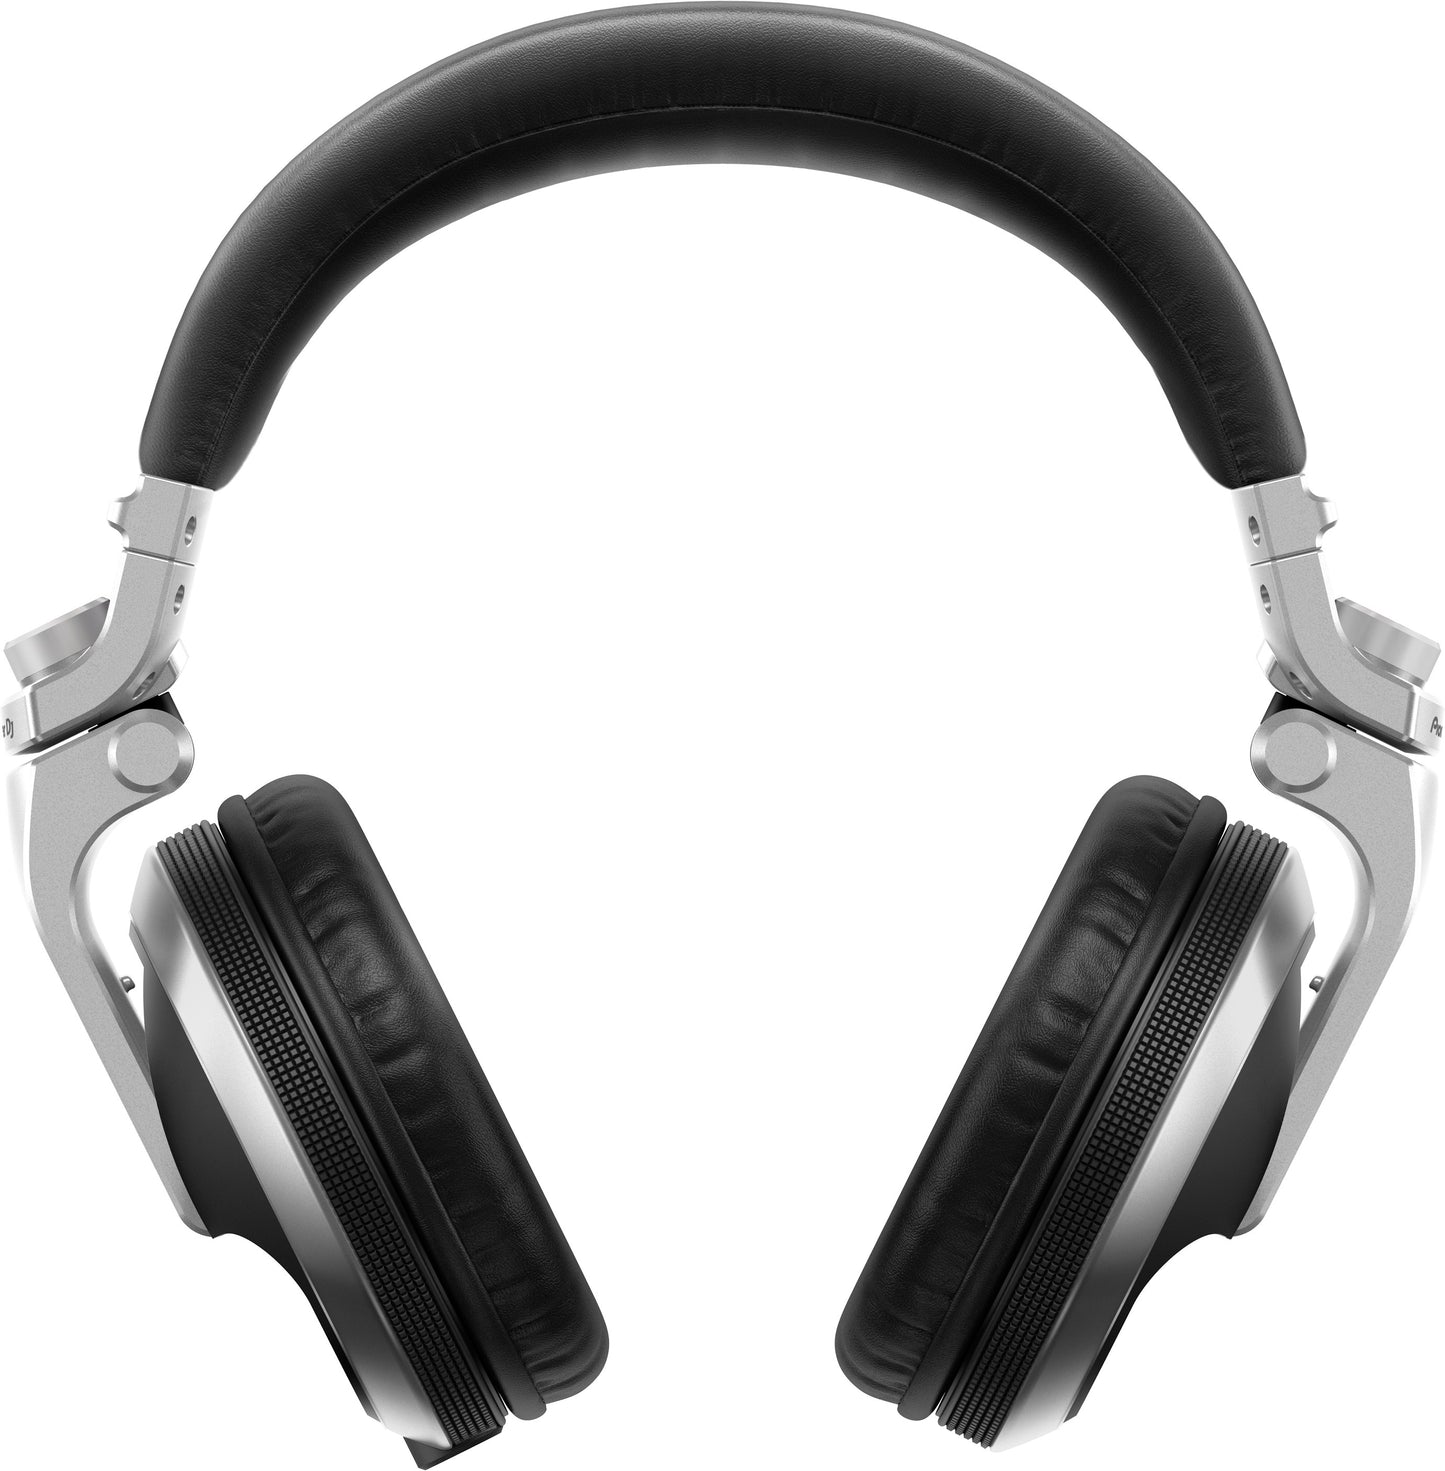 Pioneer DJ HDJ-X5S Over-ear DJ headphones - Silver